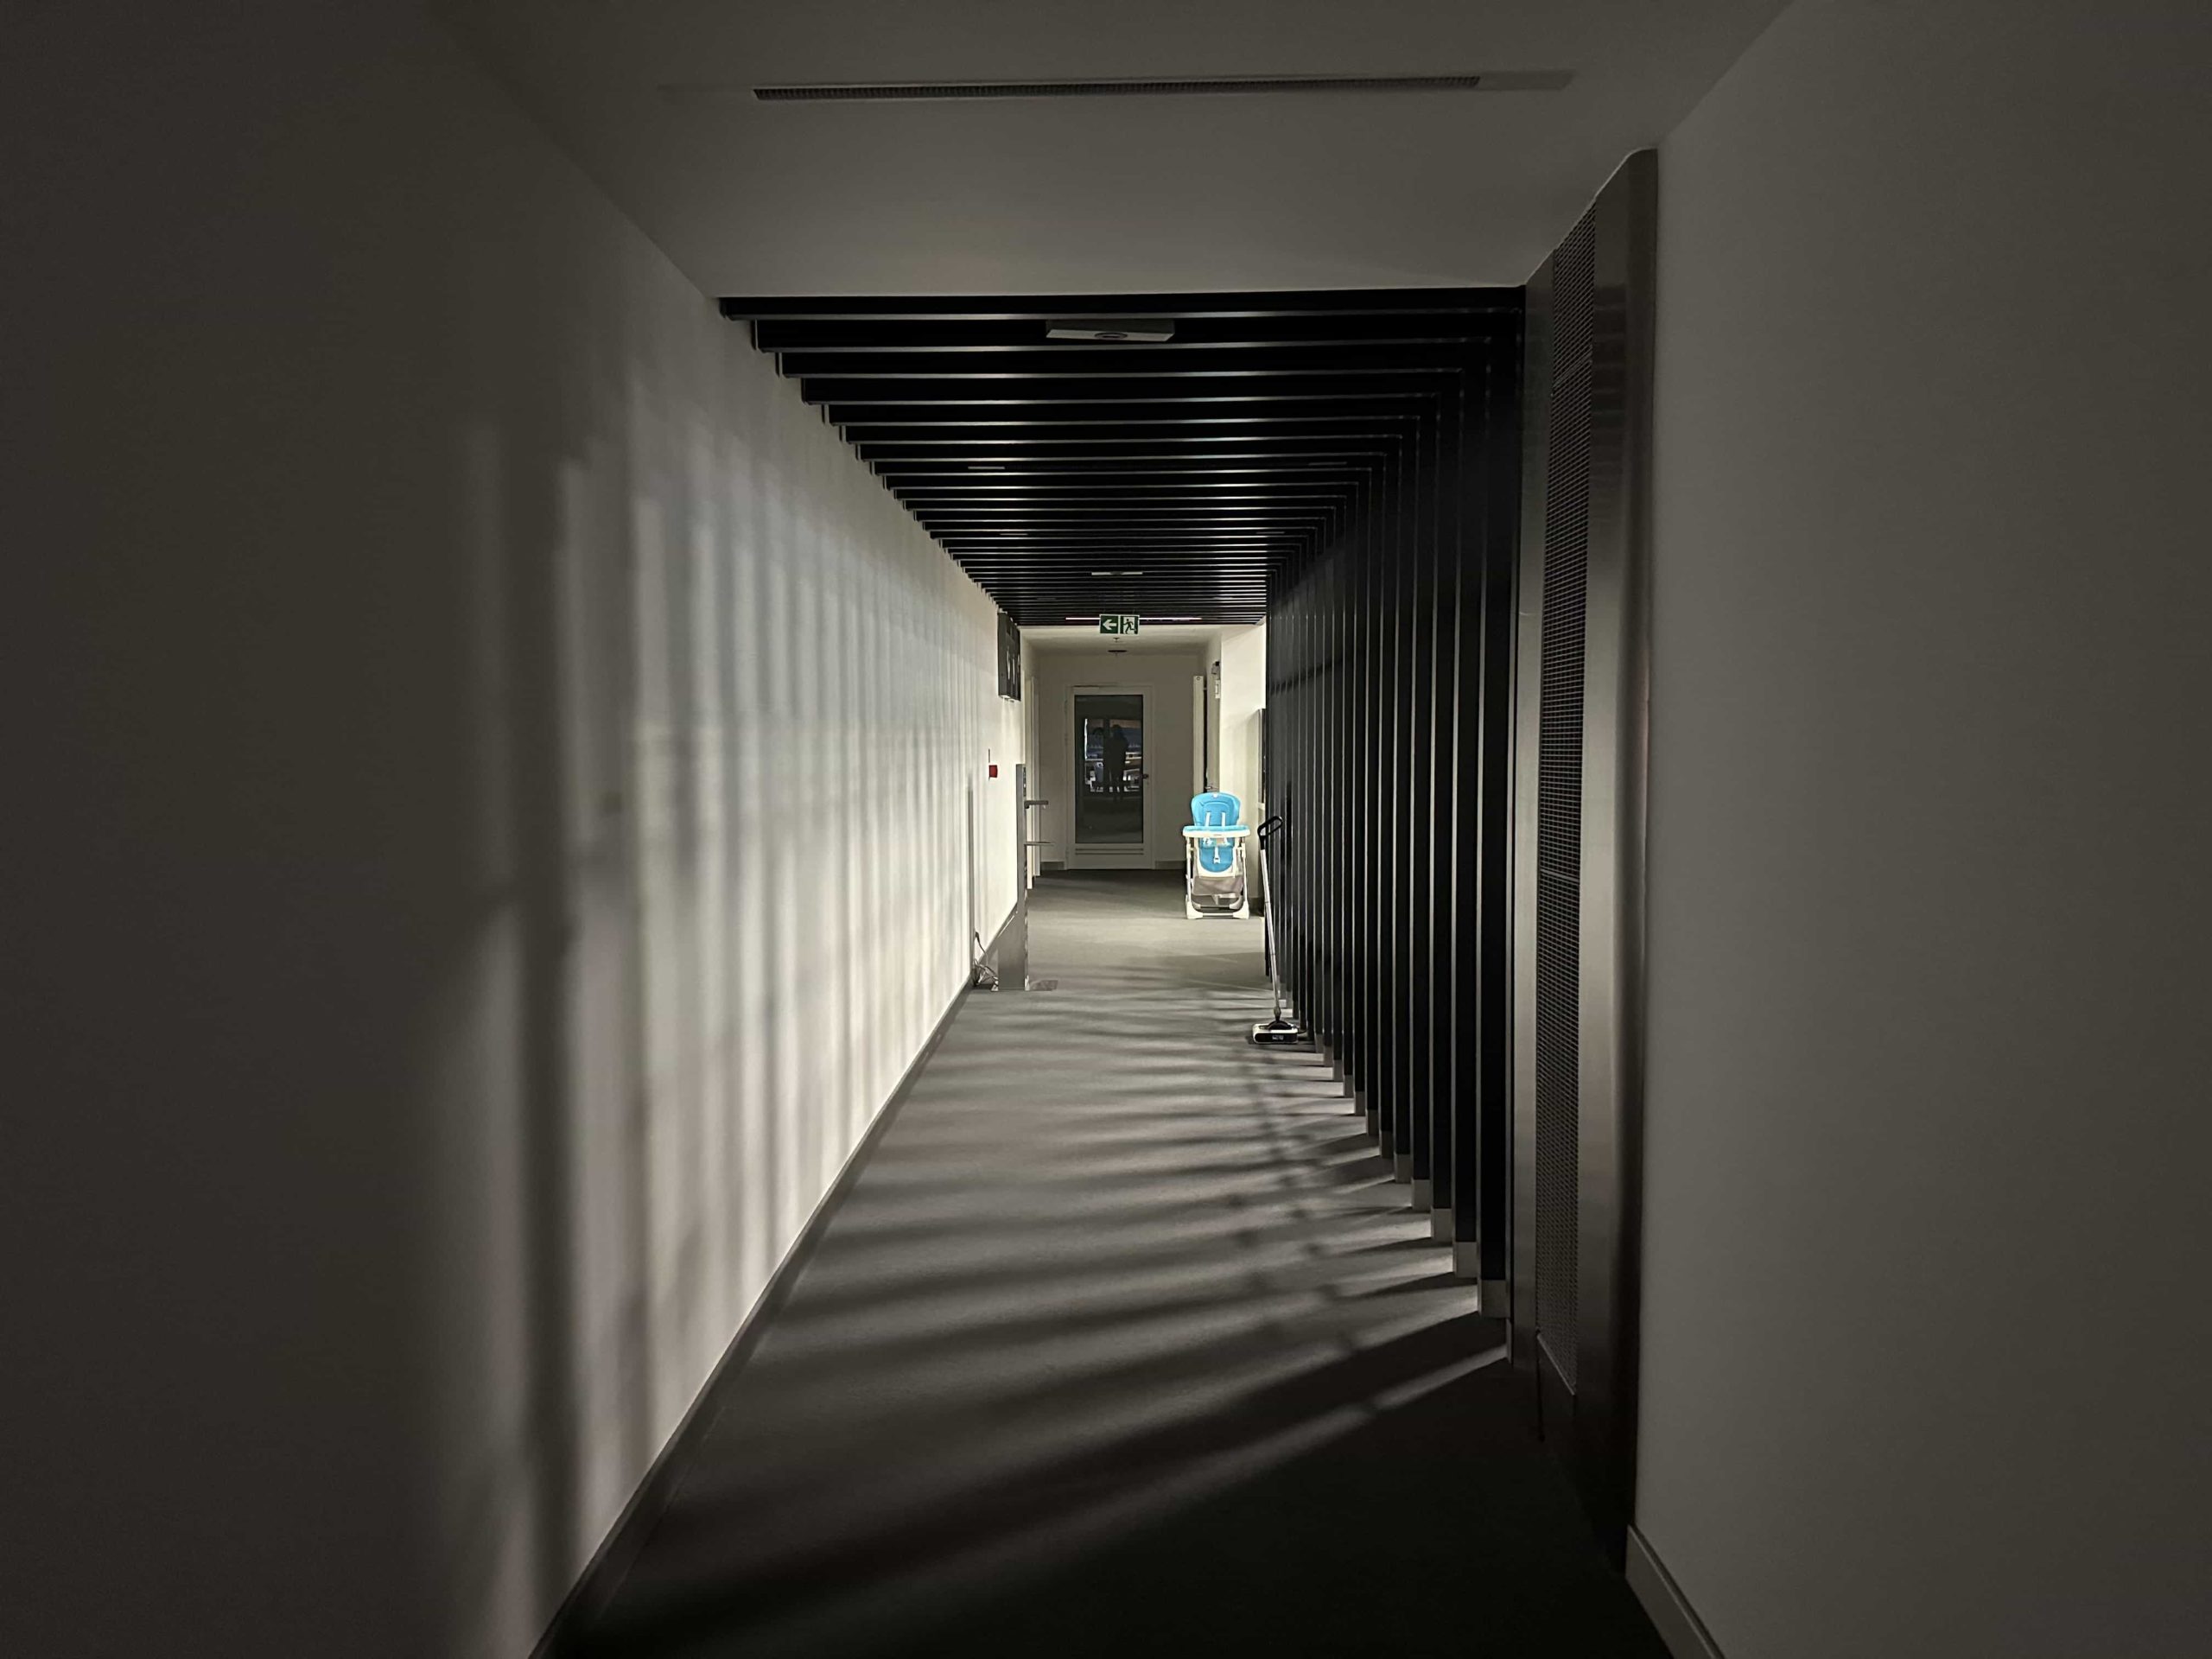 A dark, ominous corridor leading to a doorway